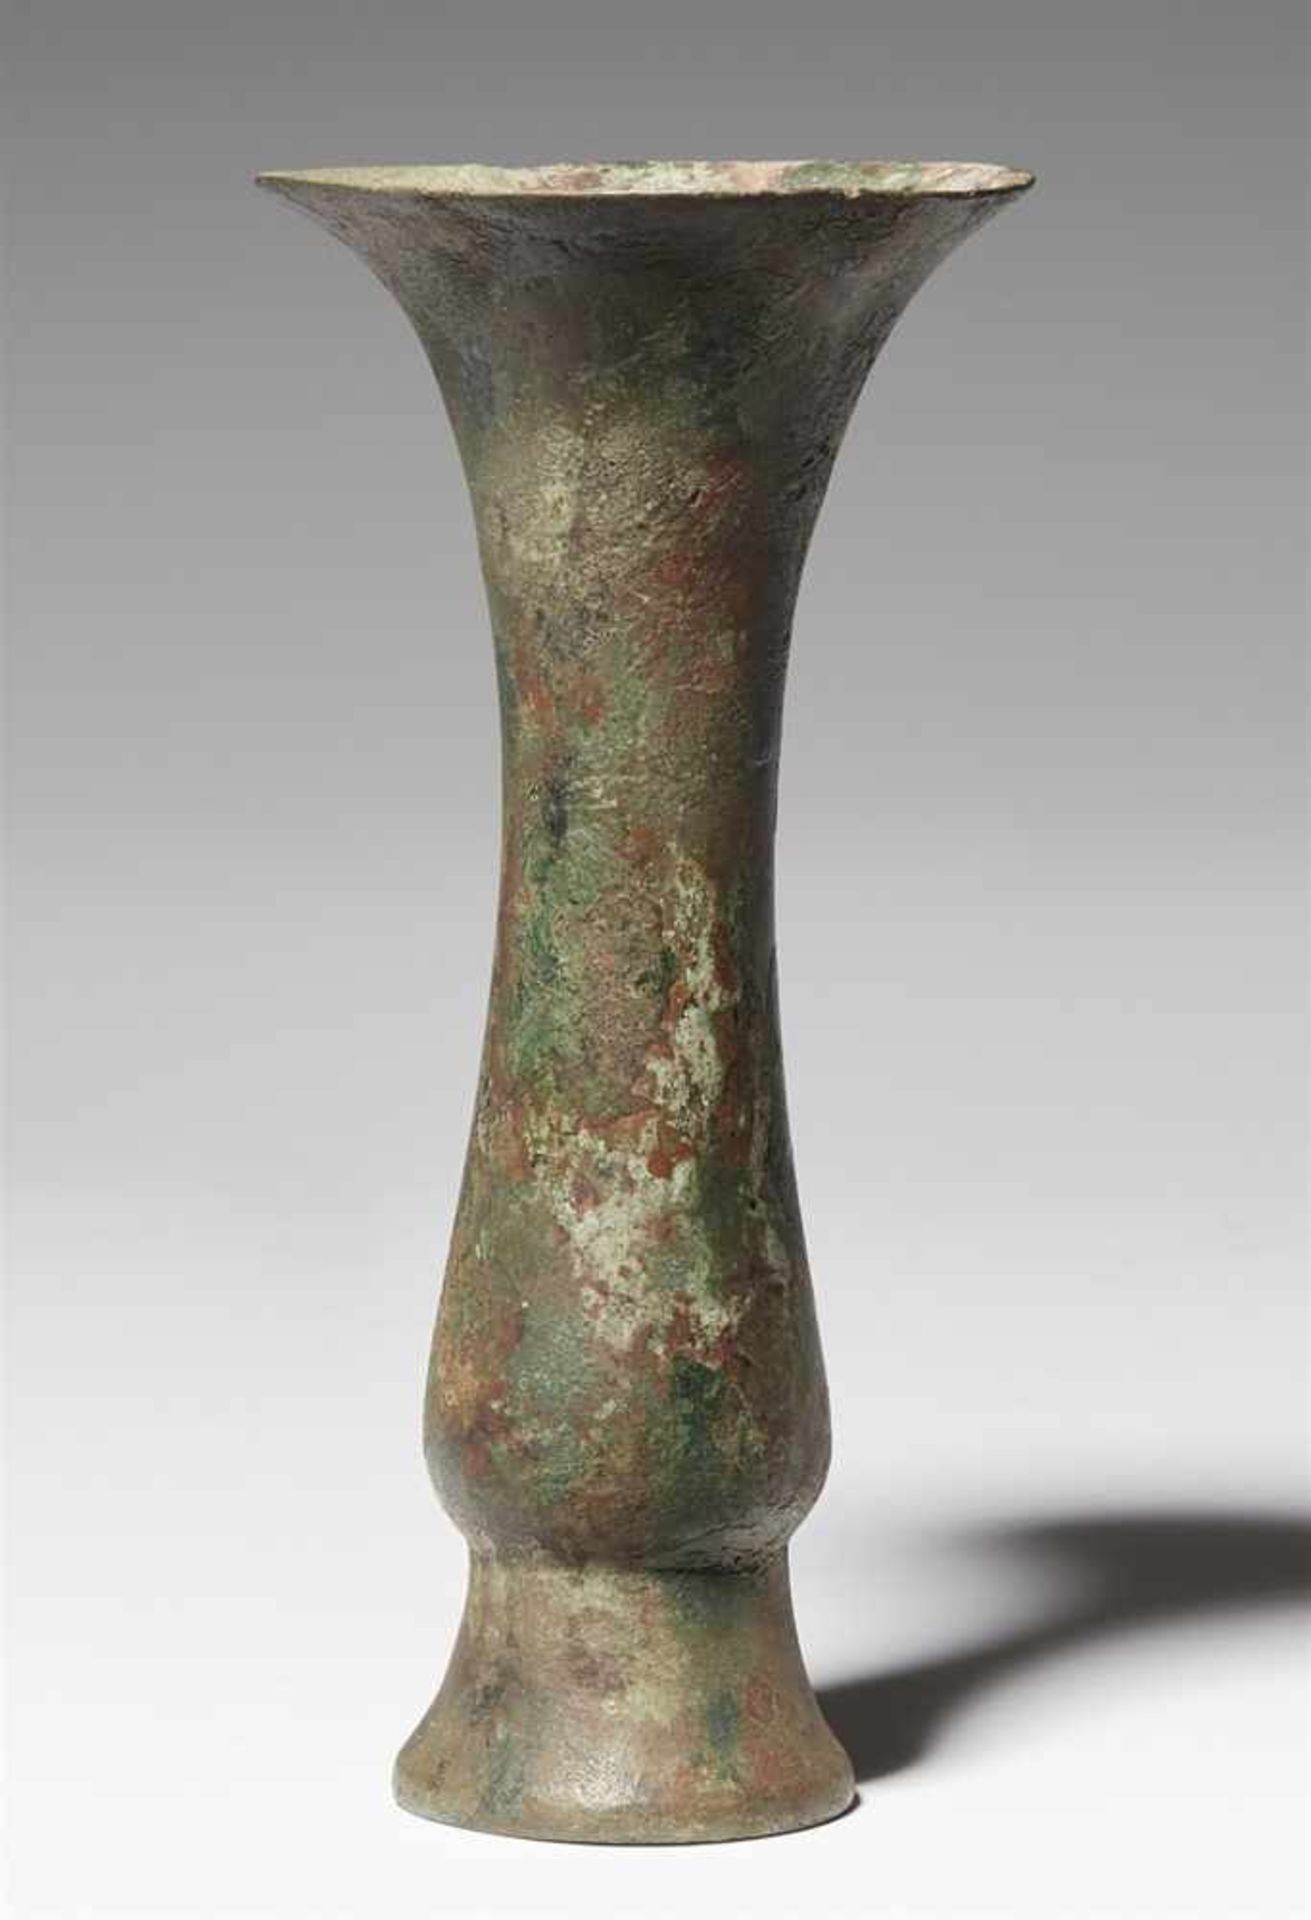 A small elegant bronze vase of ji or duan type. Early Western Zhou dynasty, ca. 11. Jh.